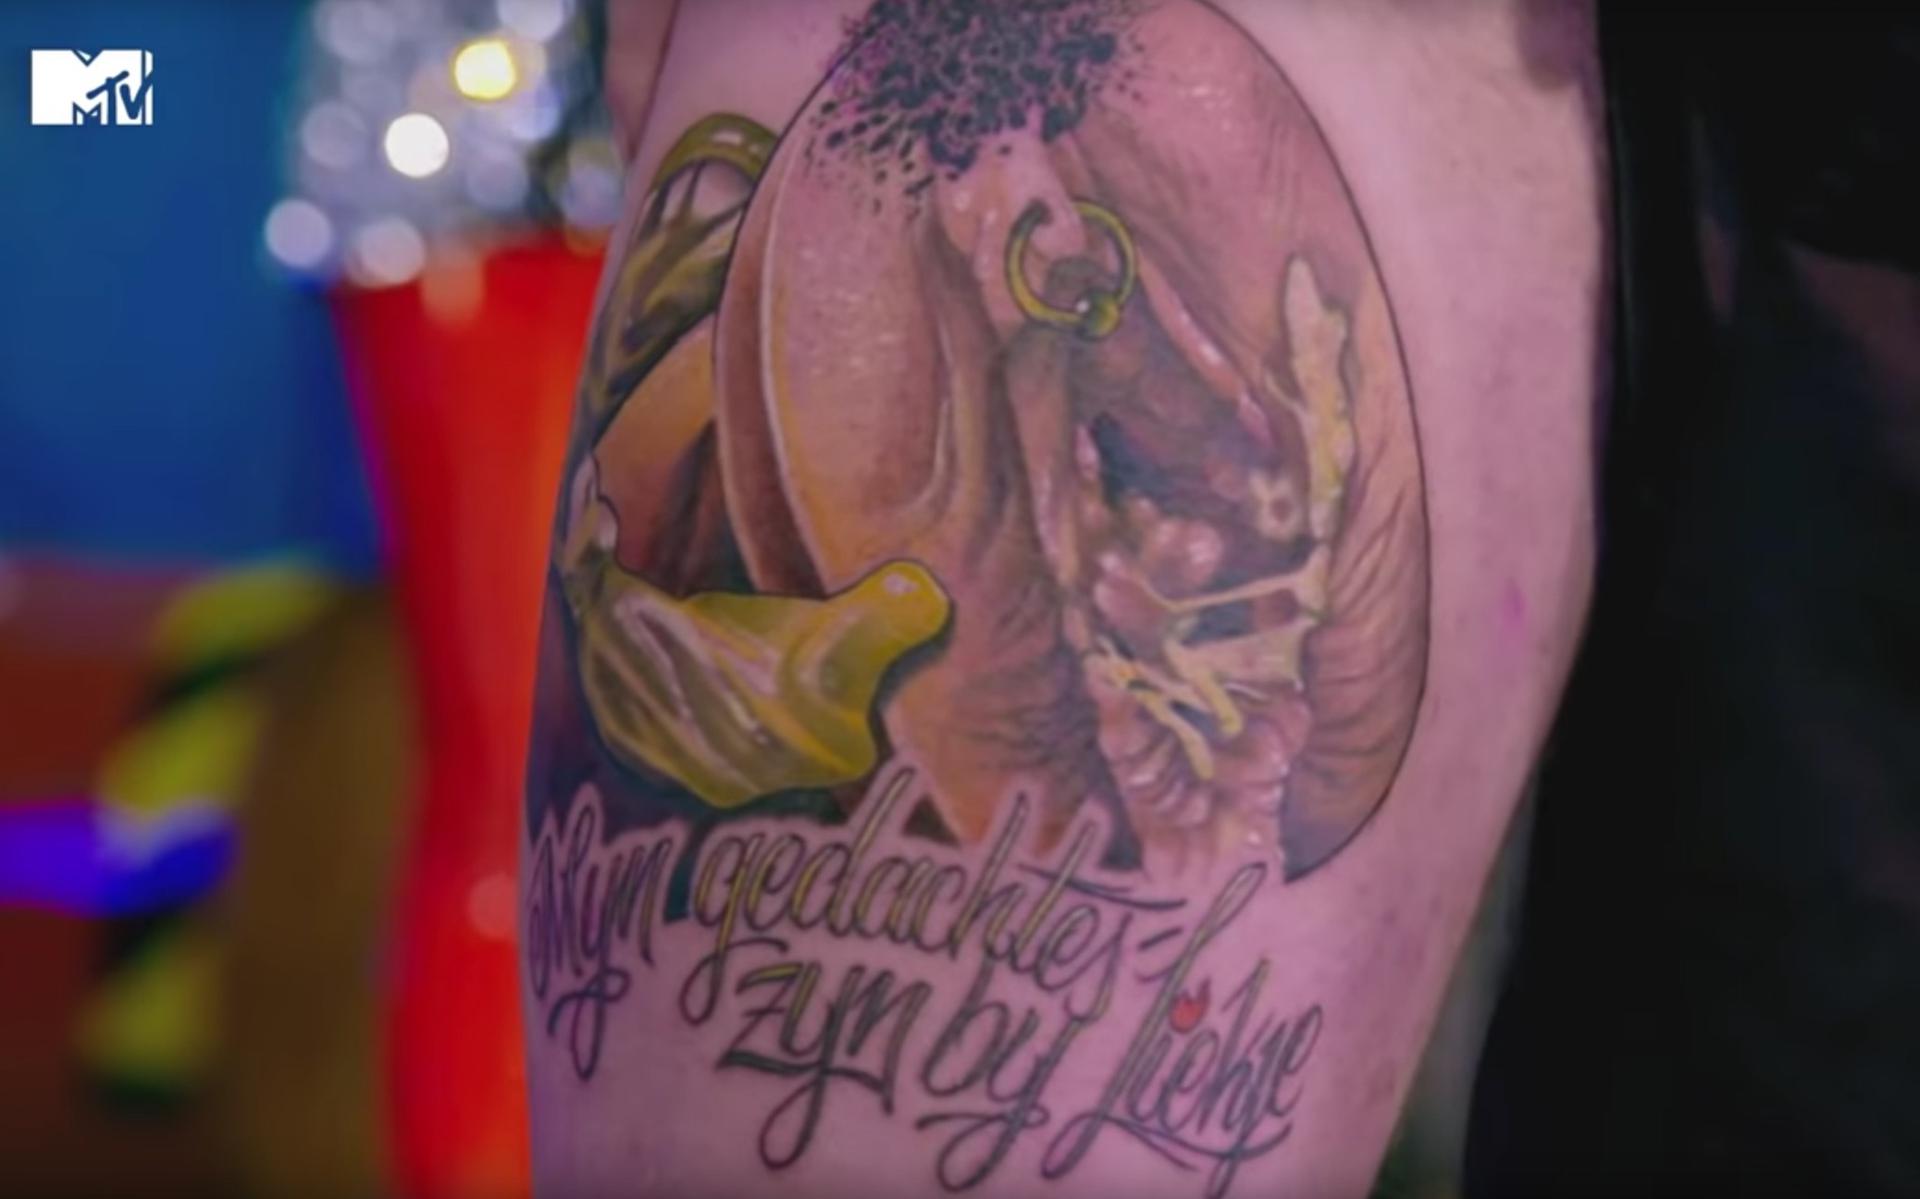 Beeld: MTV Just Tattoo Of Us